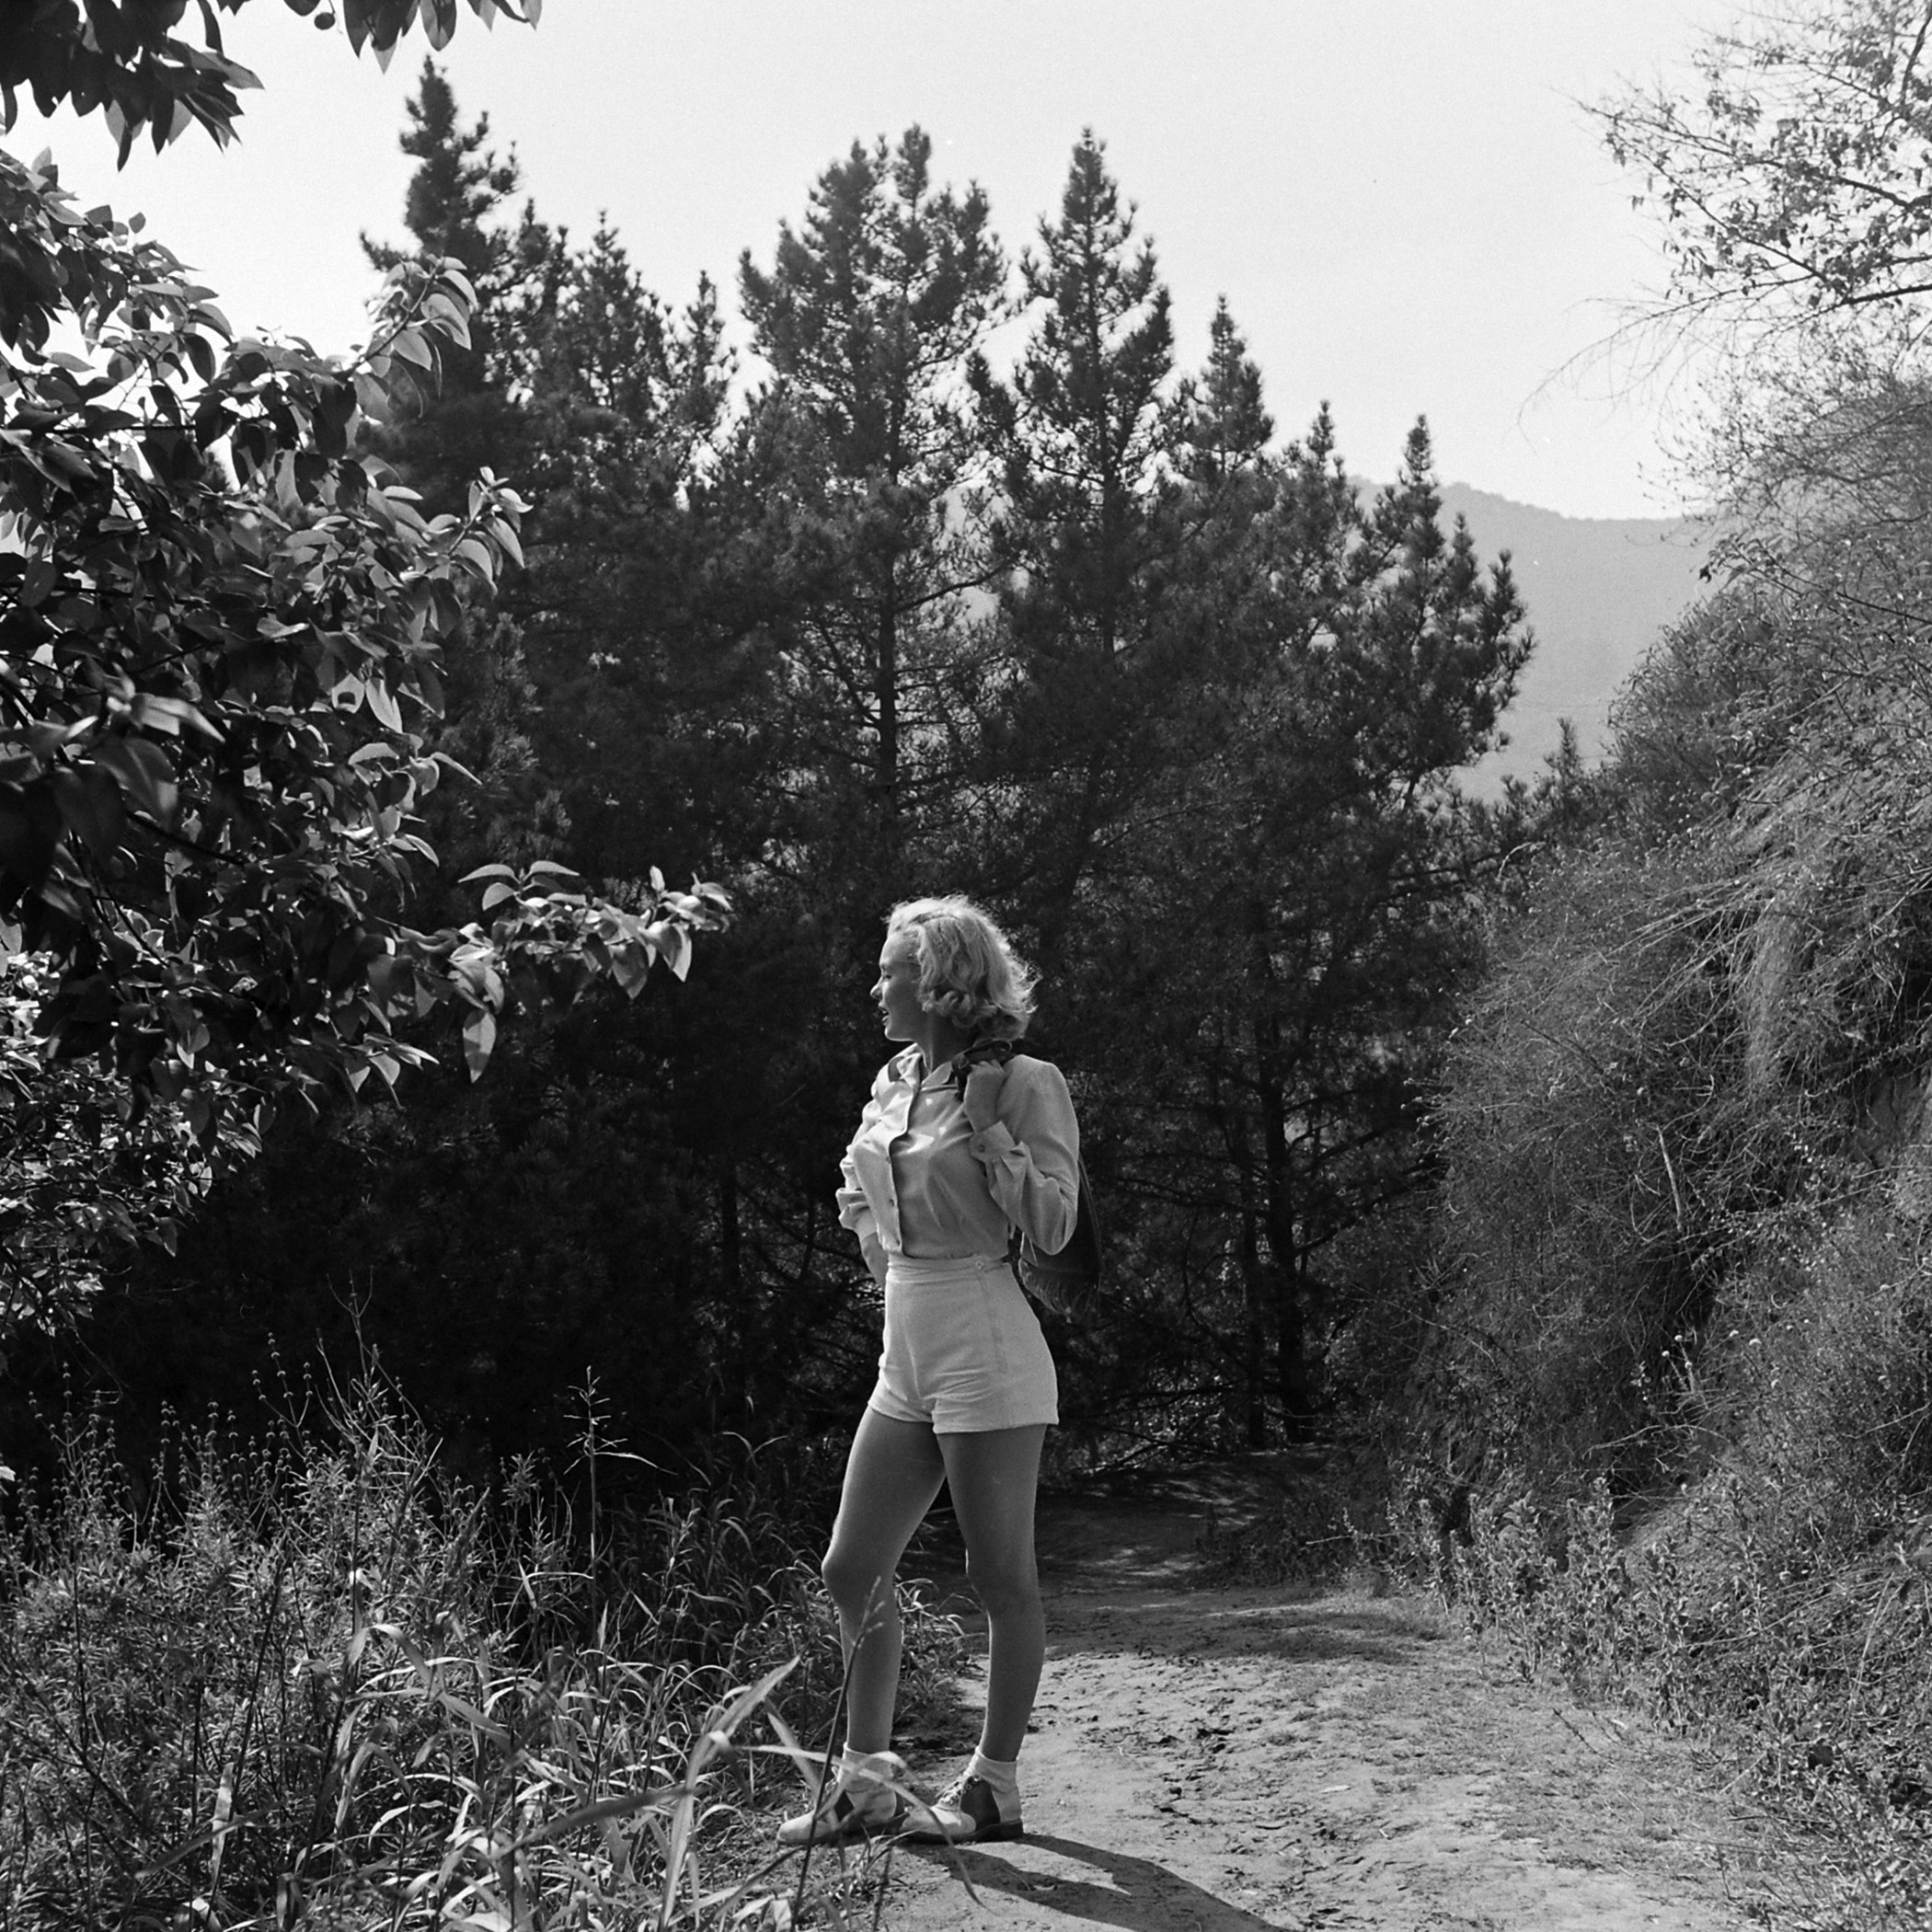 Marilyn Monroe in Griffith Park in Los Angeles, California, 1950.